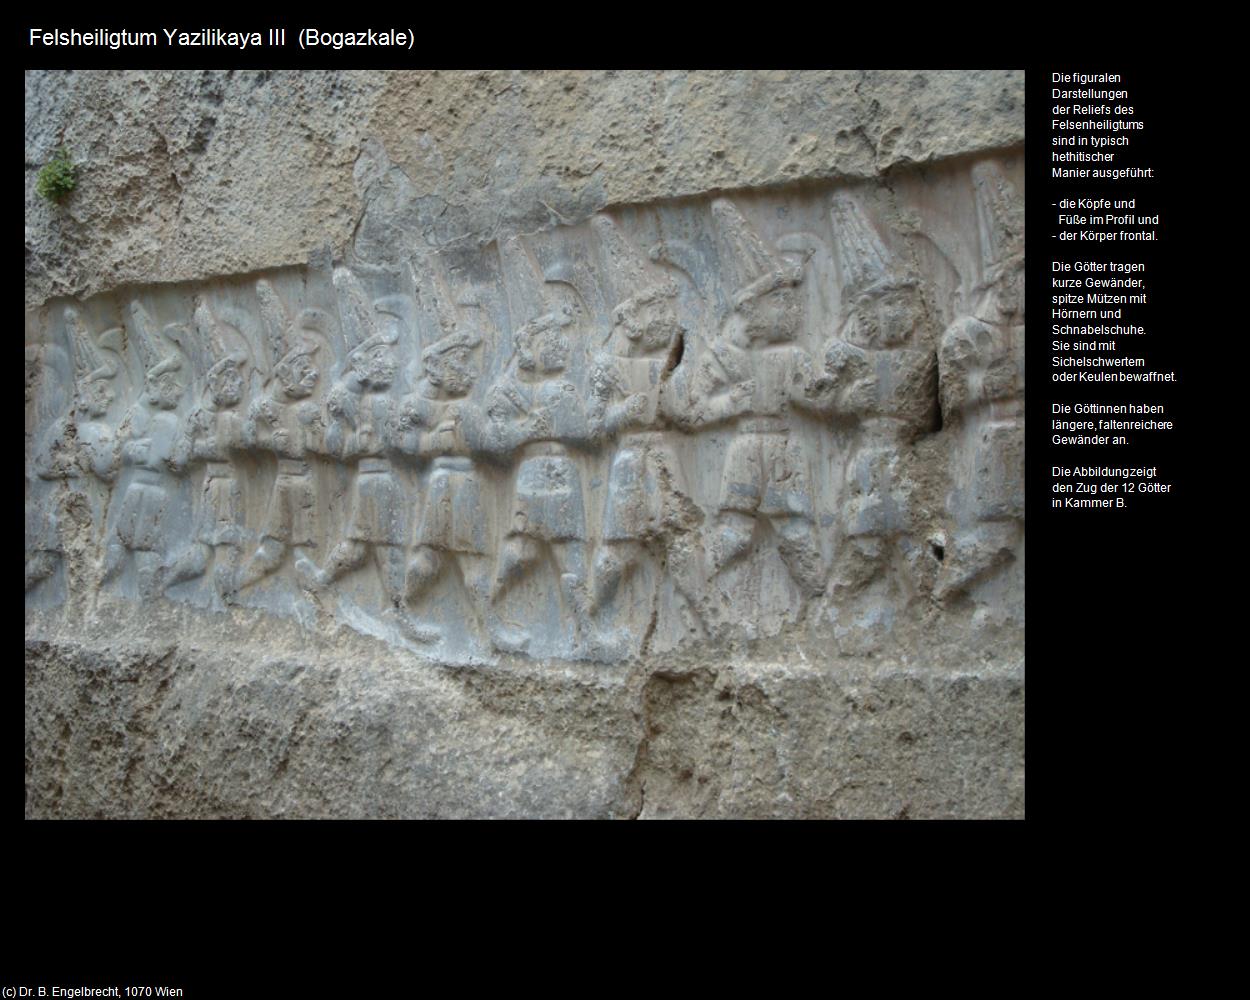 Felsheiligtum-Reliefs (Bogazkale) in TÜRKEI